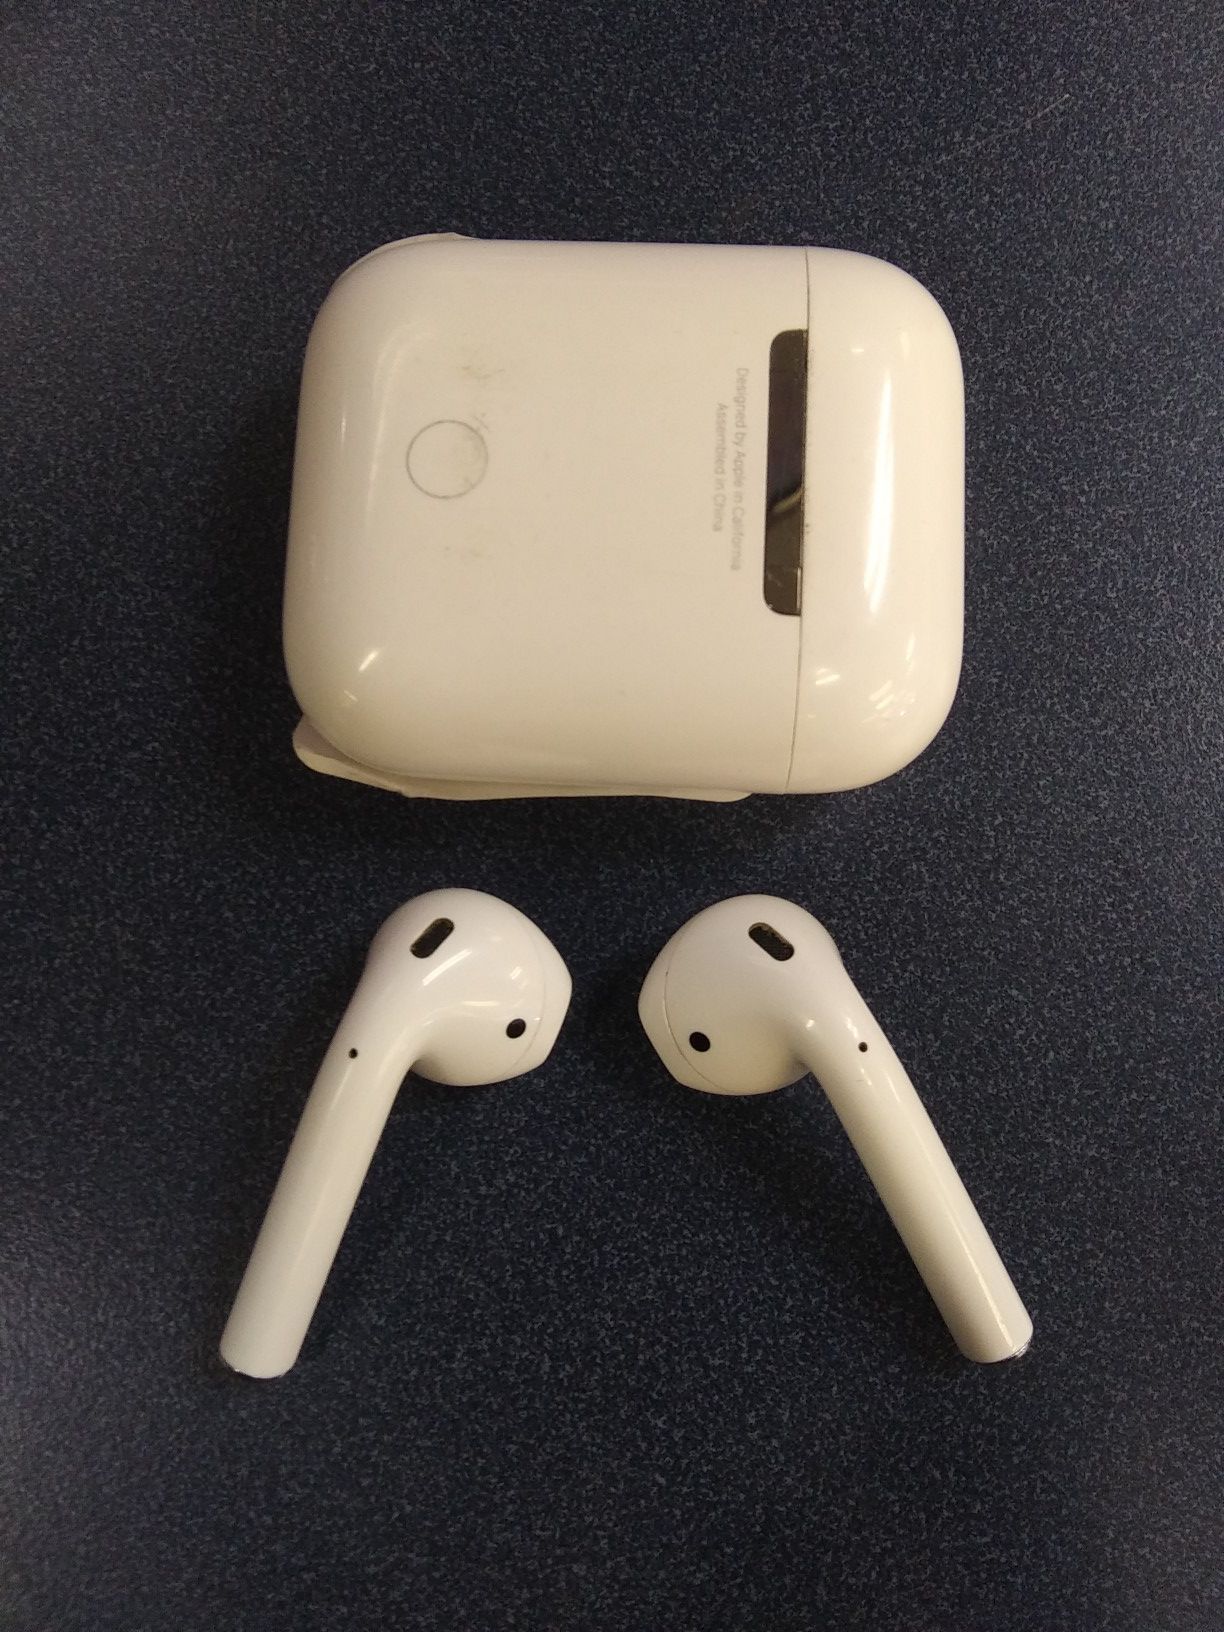 Apple Air Pods